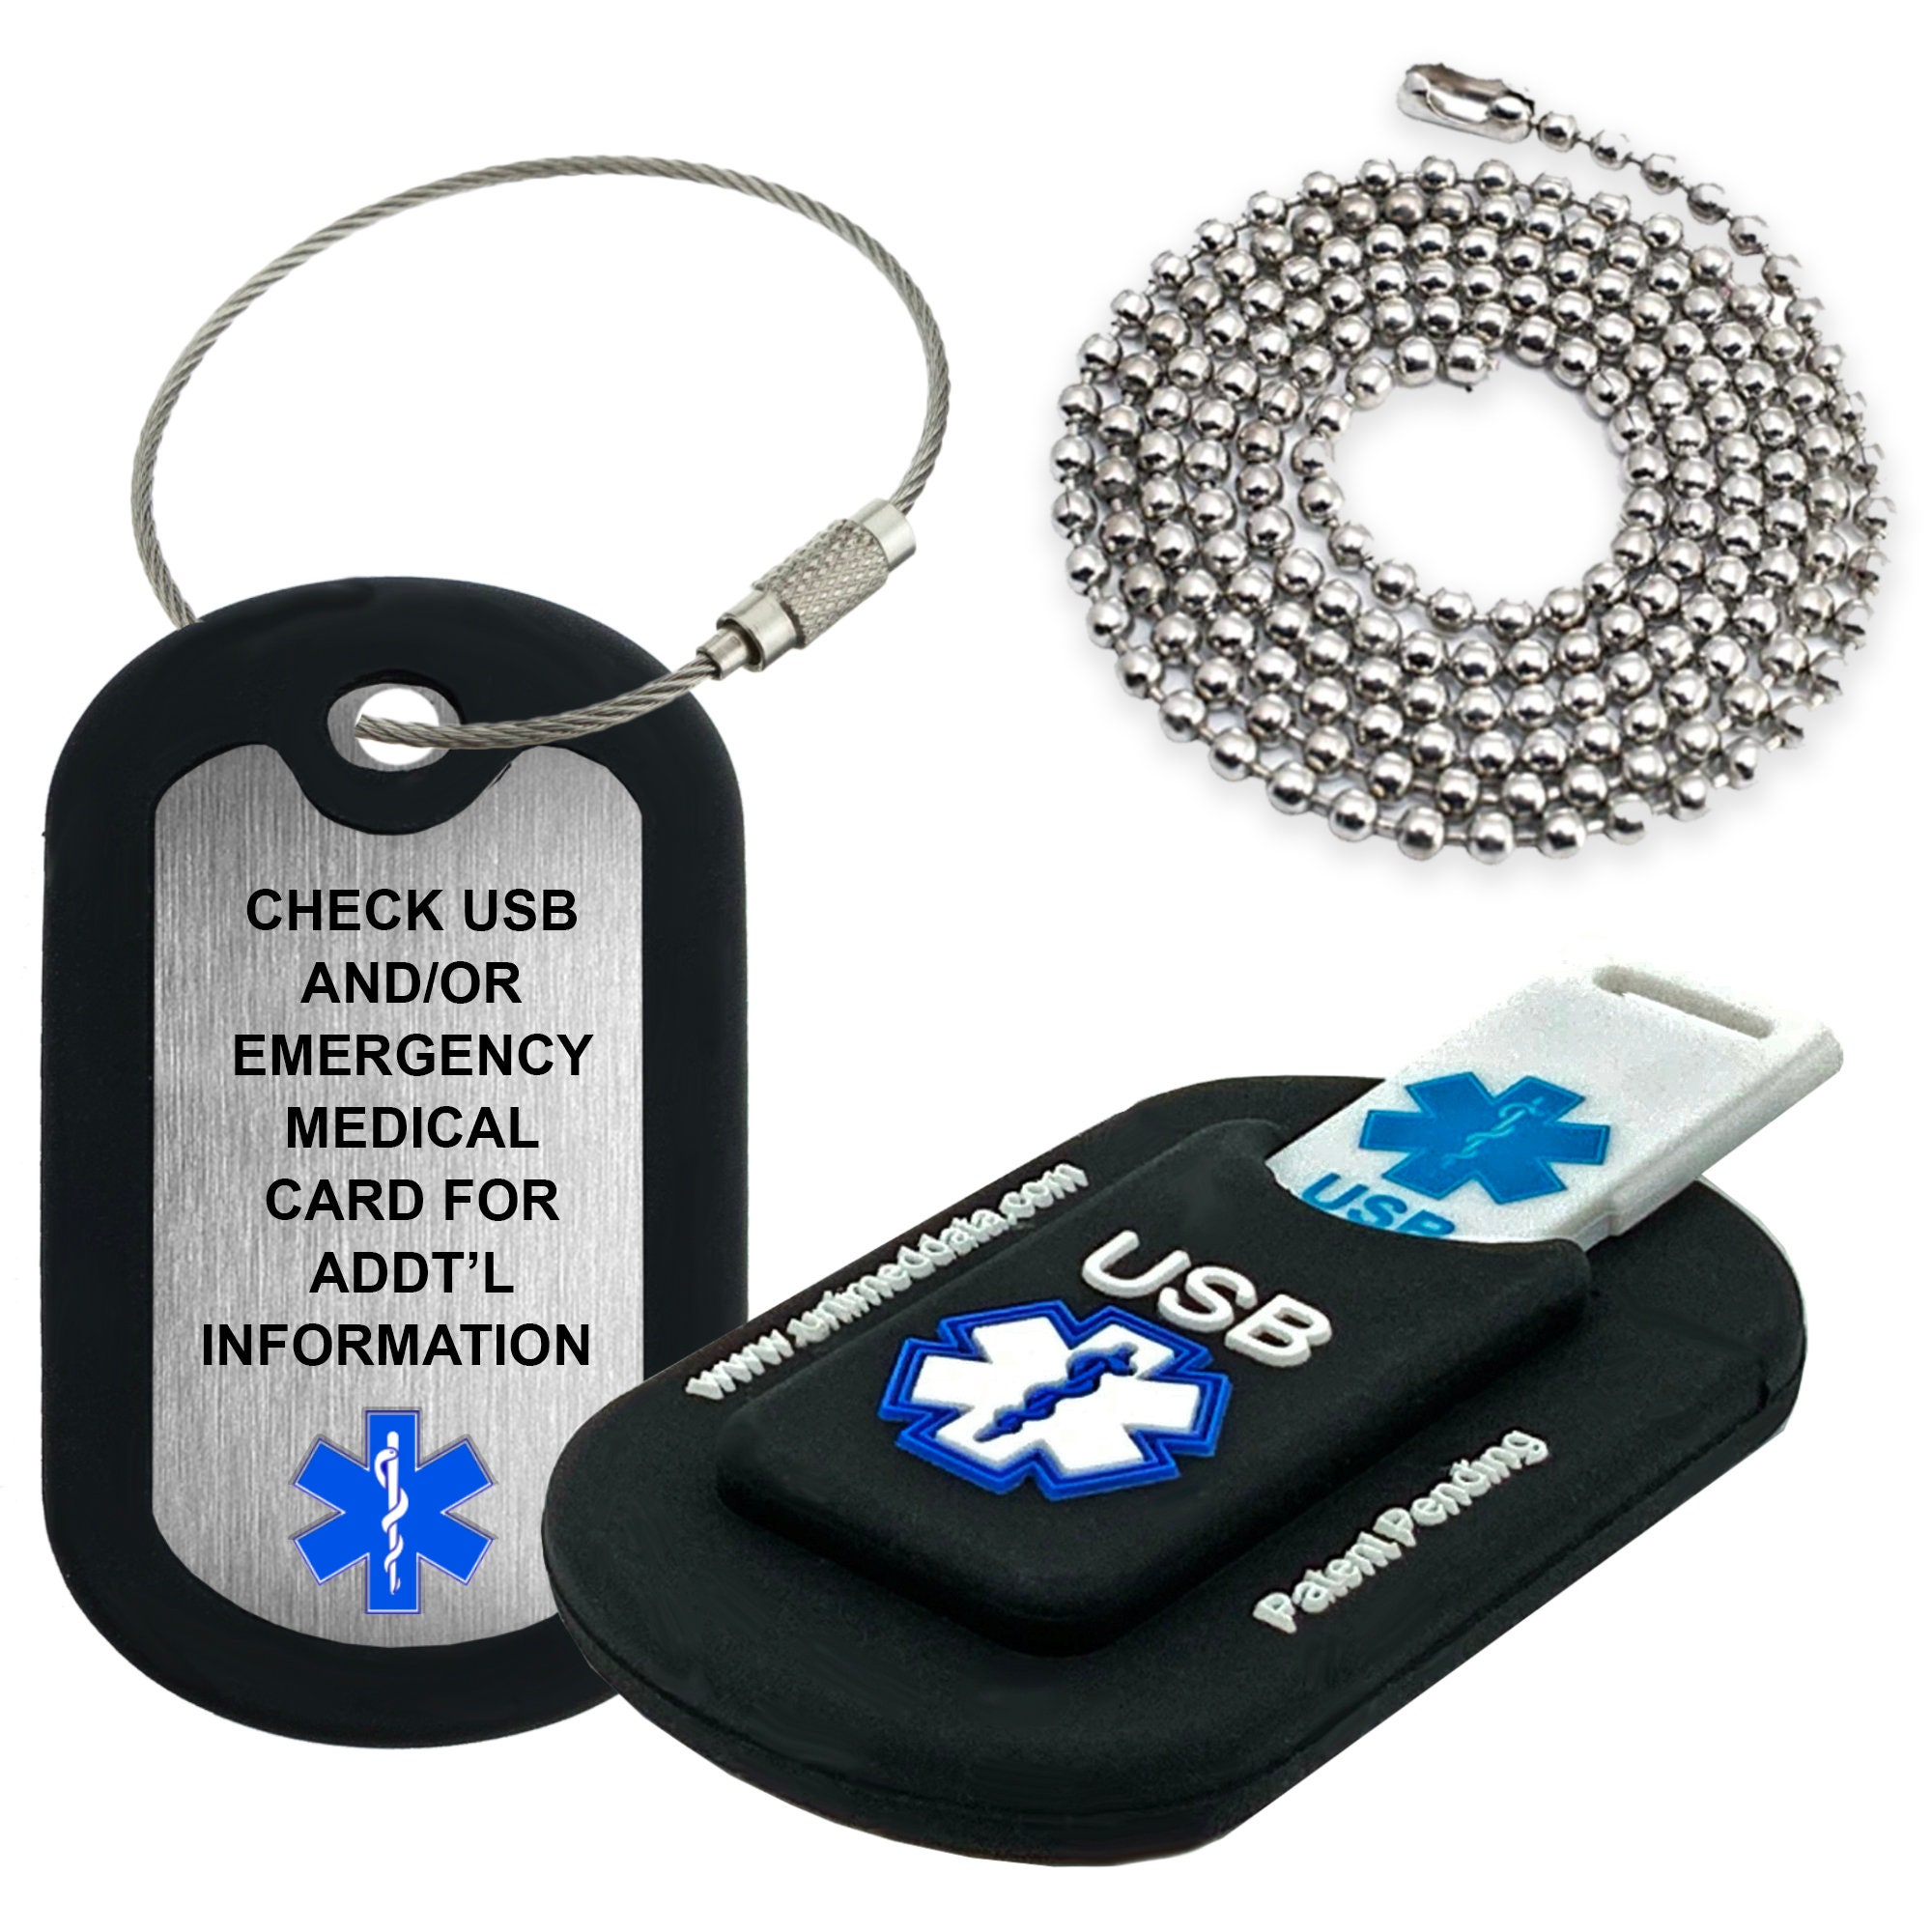 Phone IDs & USB Medical Alert Bracelets, Dog Tags | Universal Medical ID